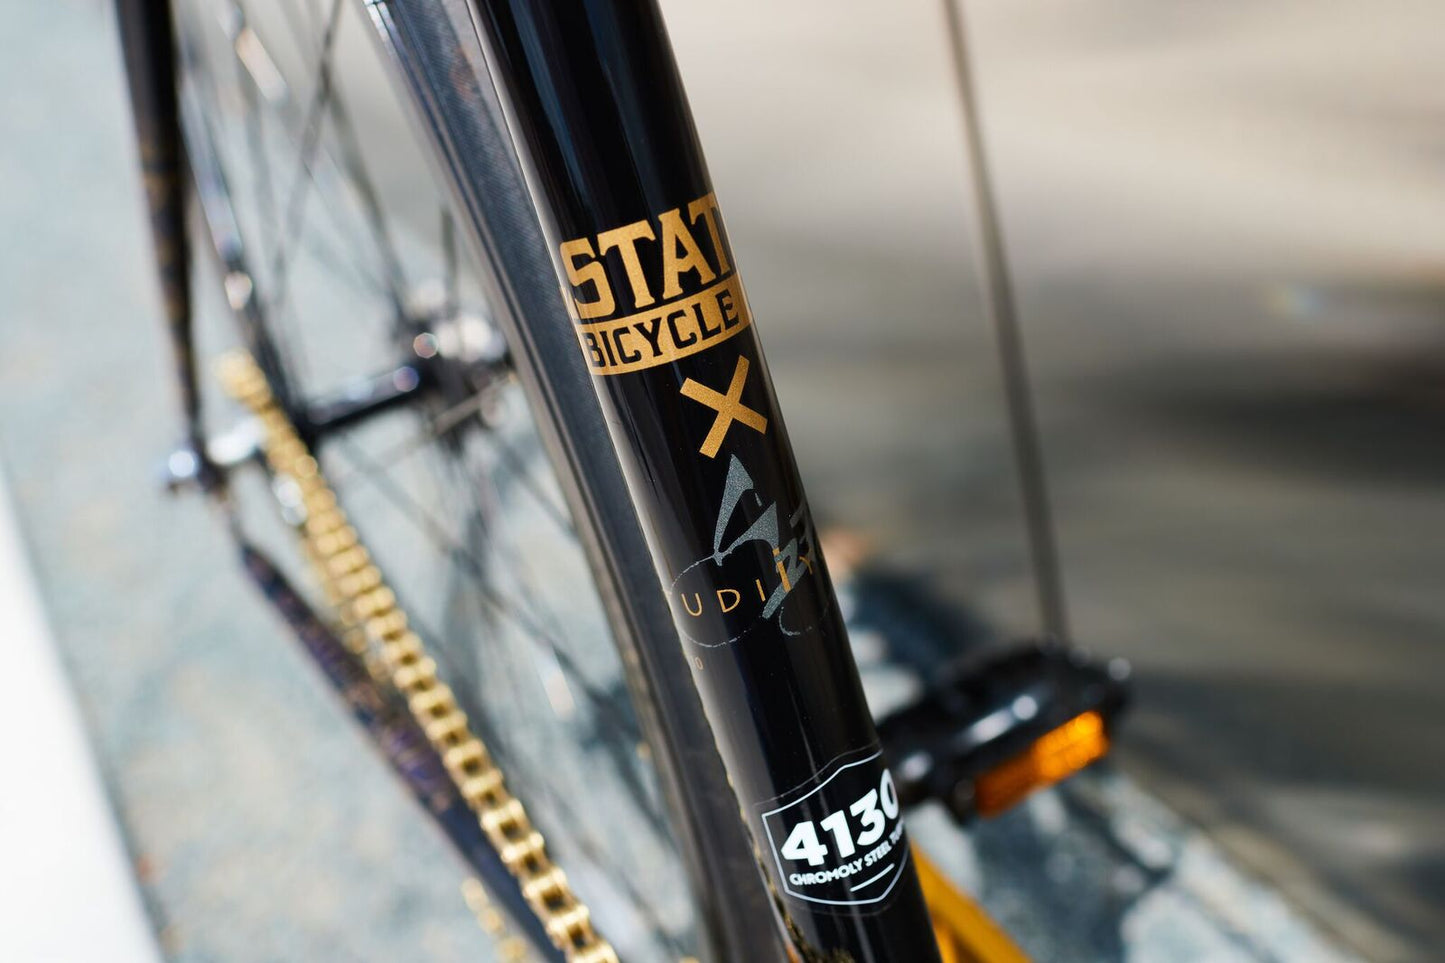 The Black Lotus - A Studiiyo23 x State Bicycle Co. Collab